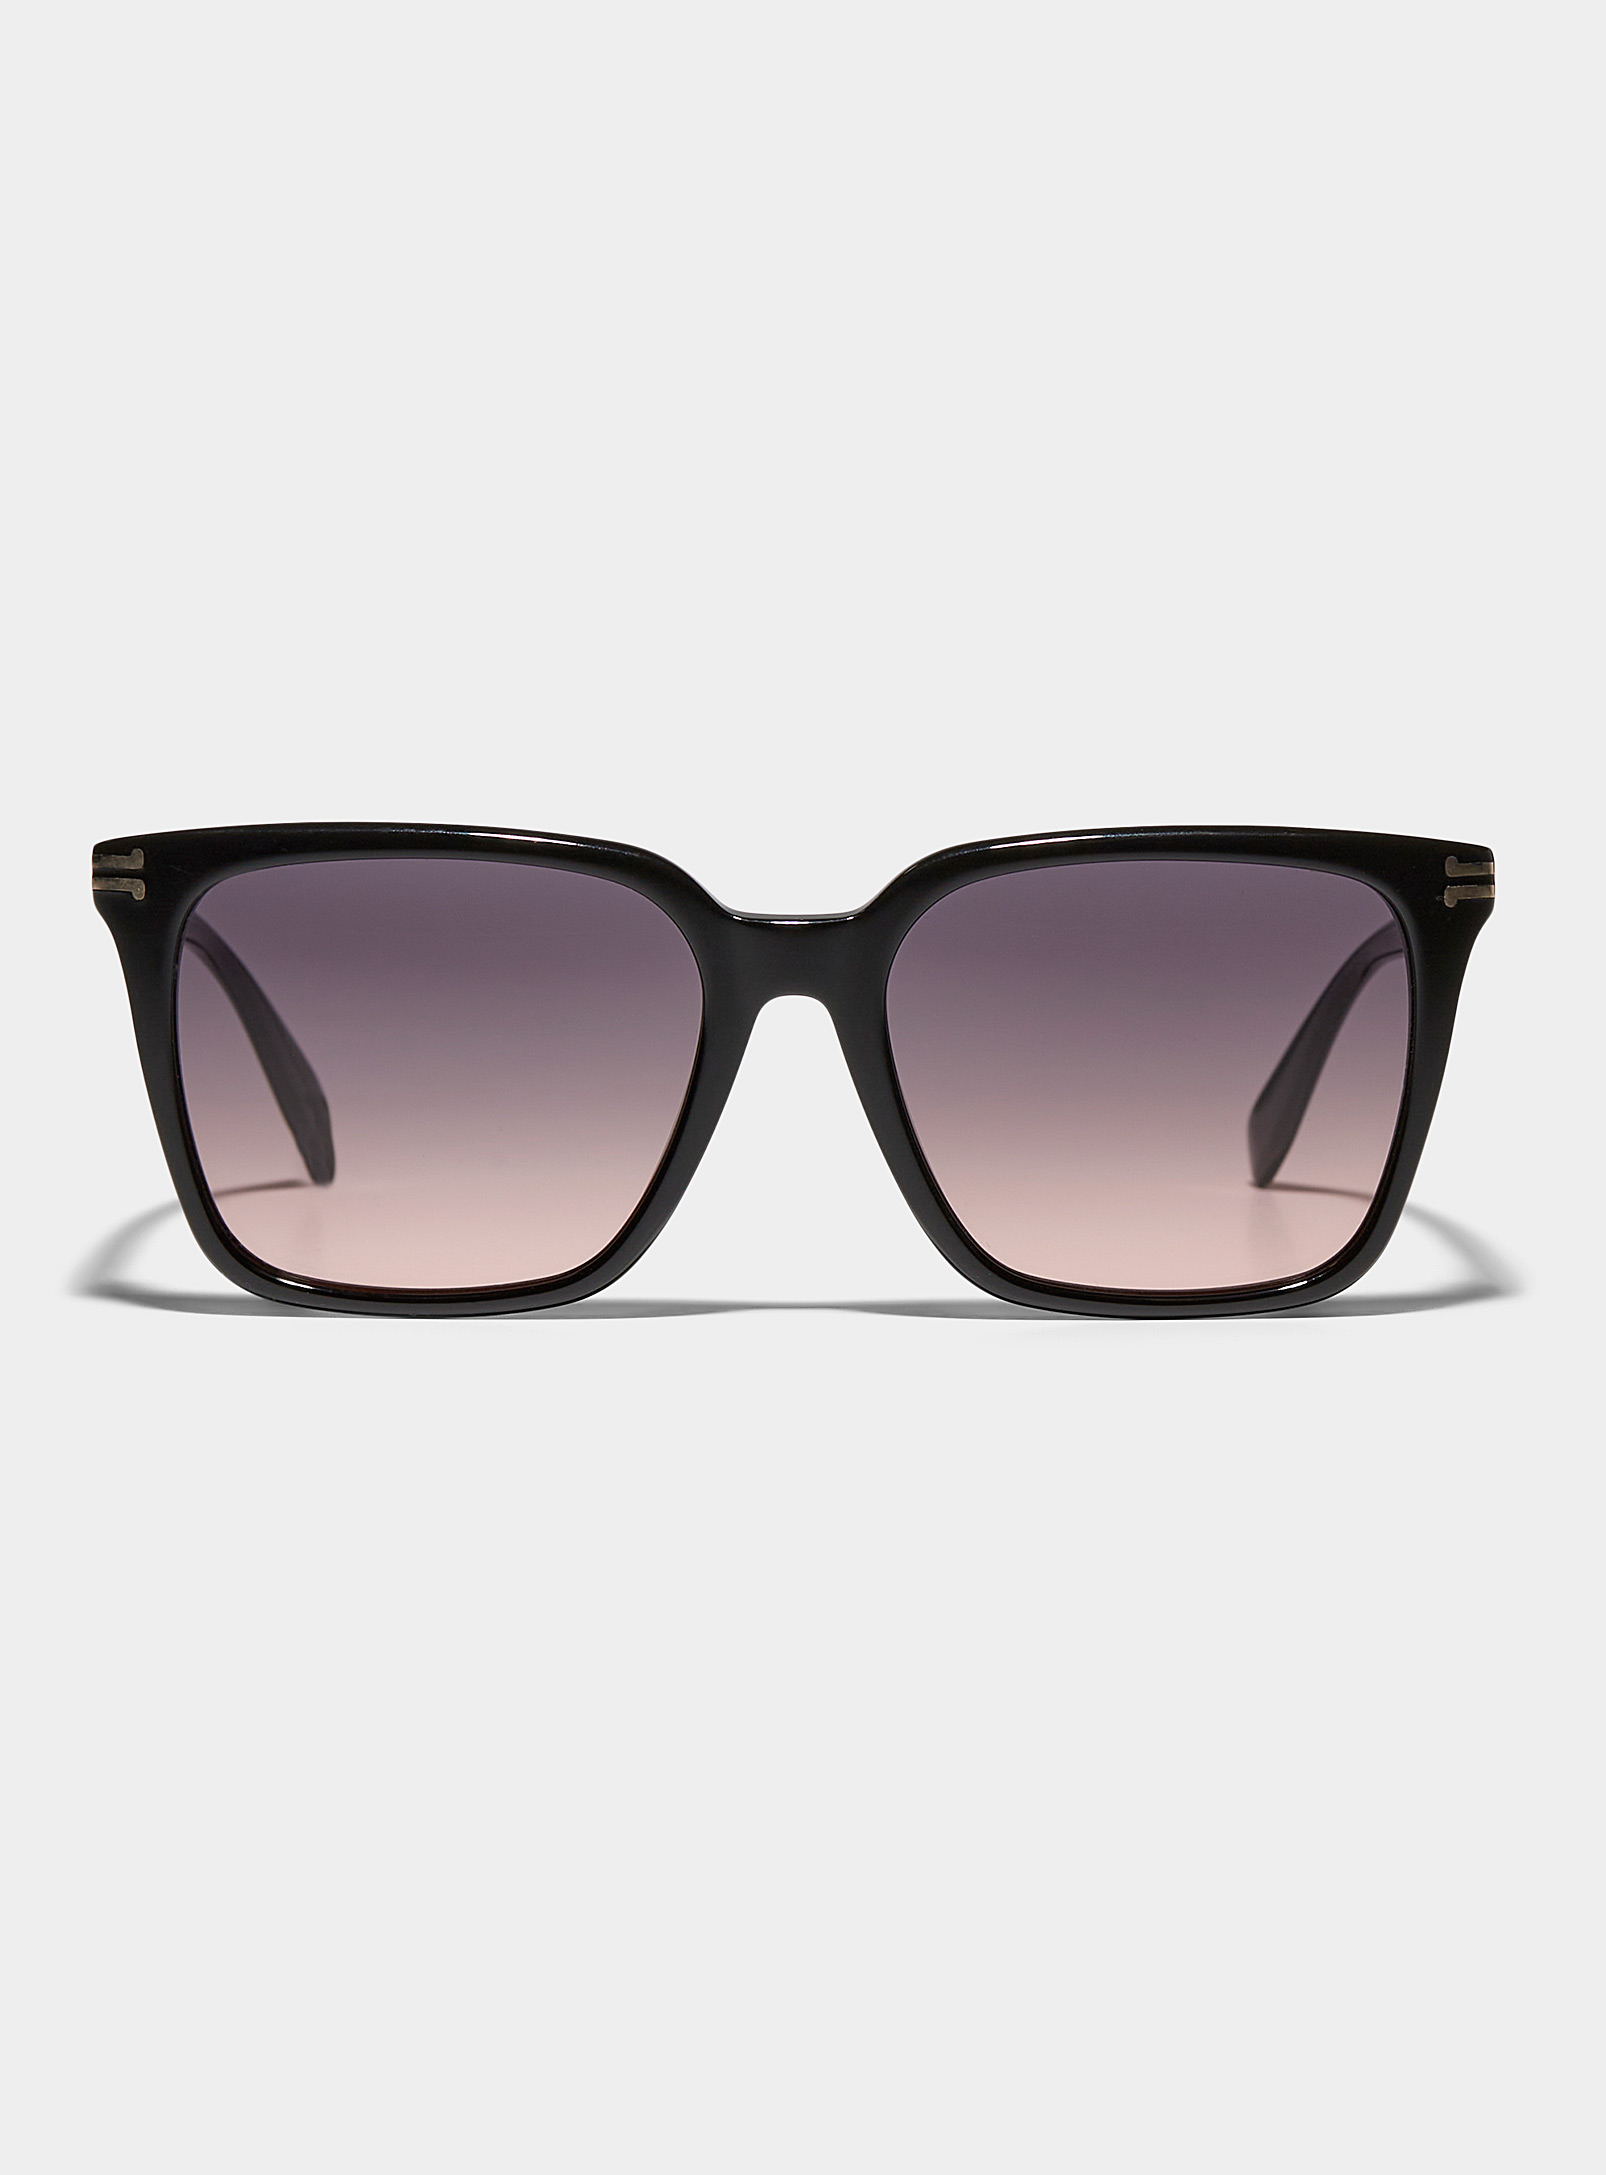 Marc Jacobs - Women's Minimalist square sunglasses